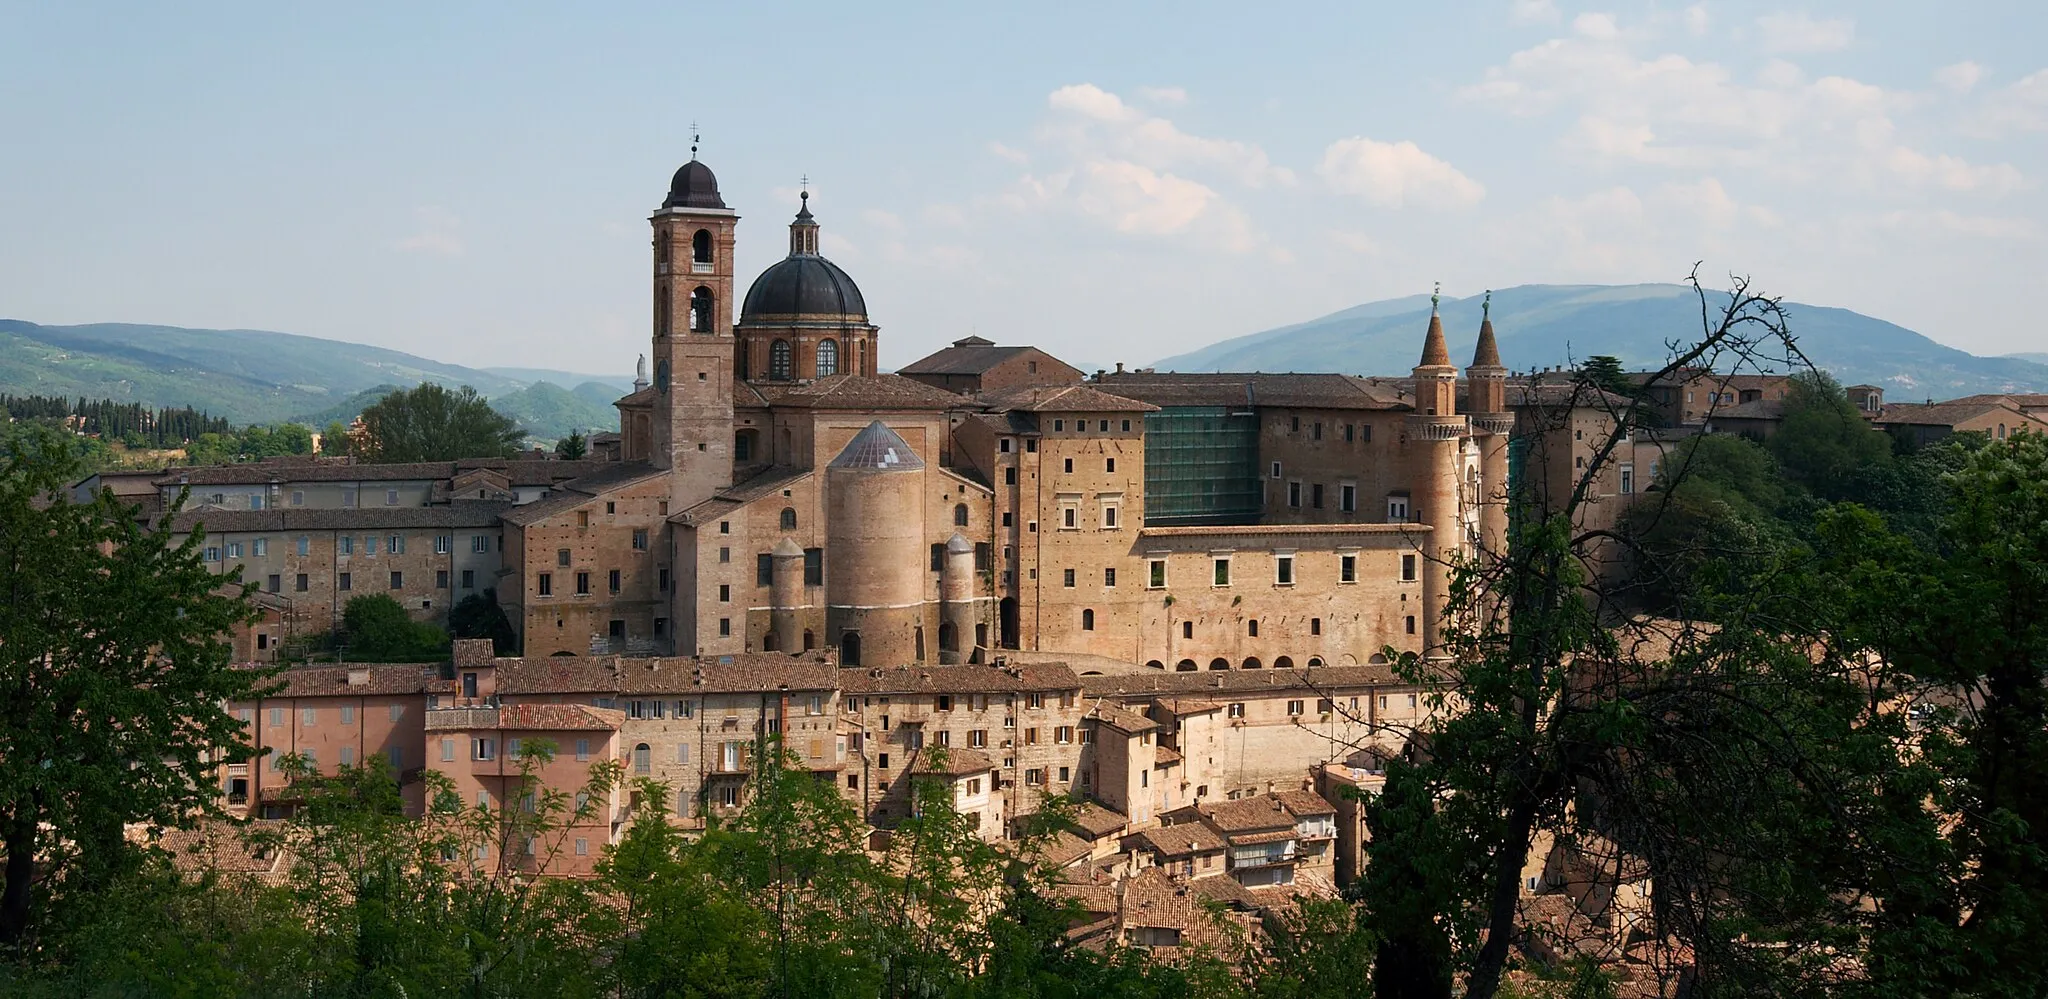 Image de Urbino